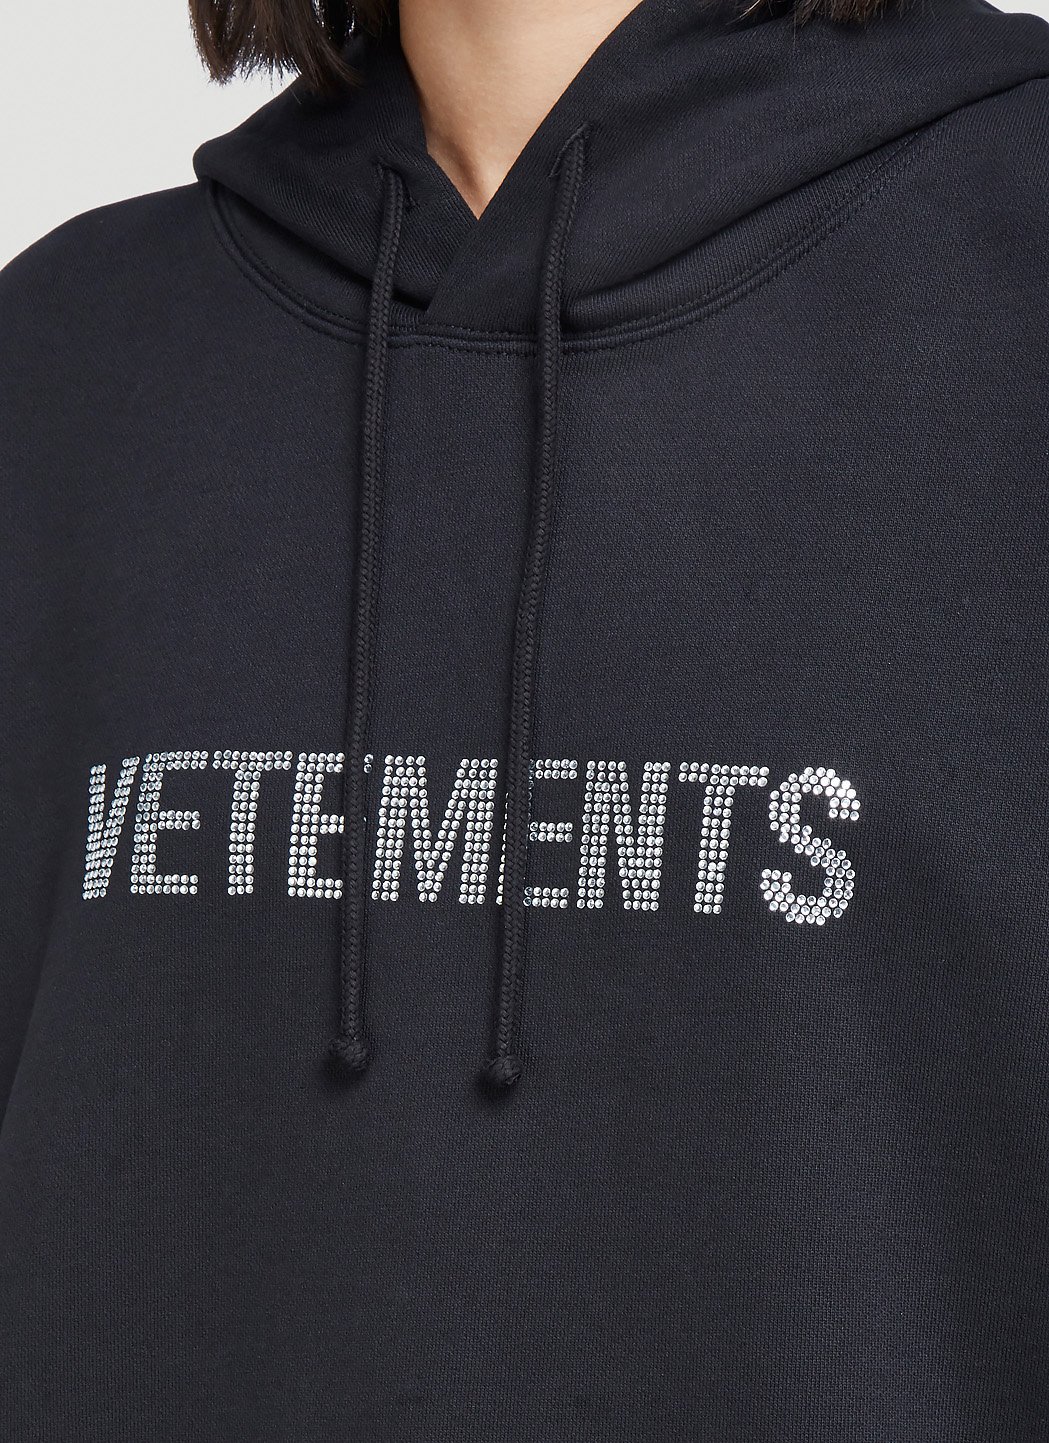 Vetements - Bling Bling Oversized Logo-Studded Cotton-Jersey T